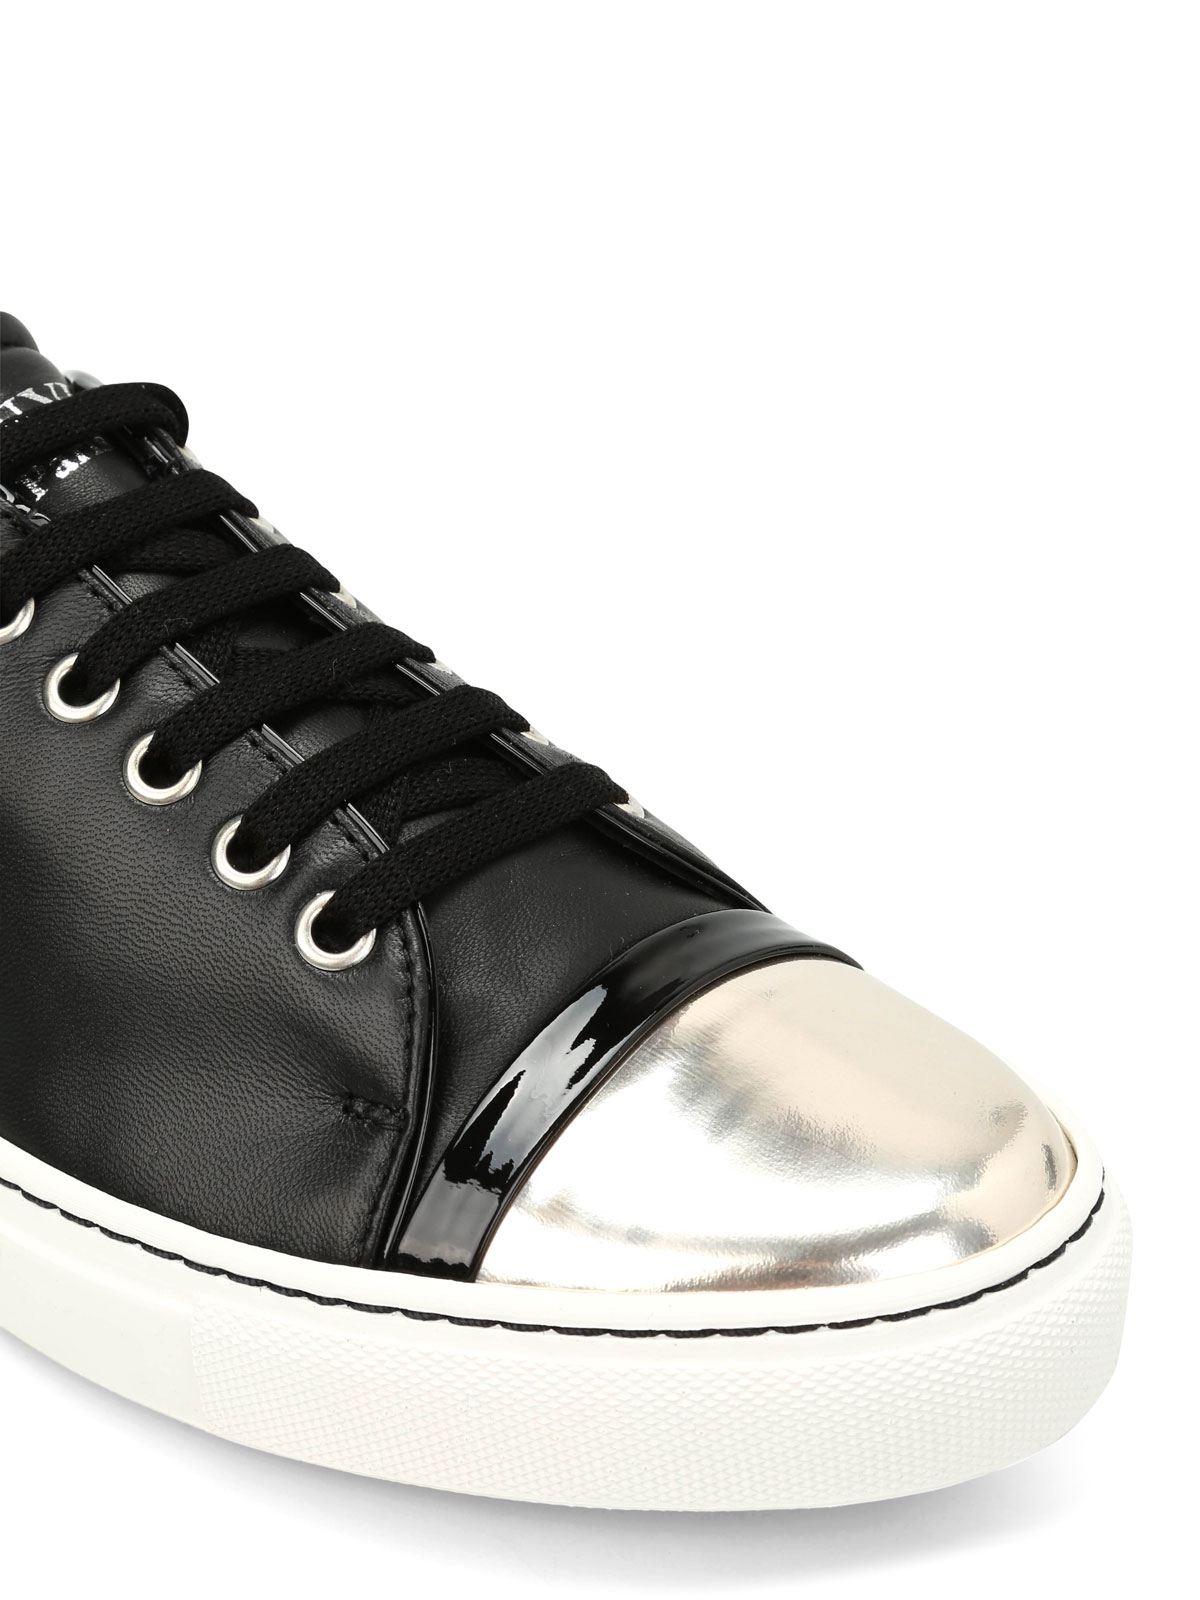 Evolve kombination Udvalg Trainers Lanvin - Metallic toe leather sneakers - FWSKPK00EXHE10M2